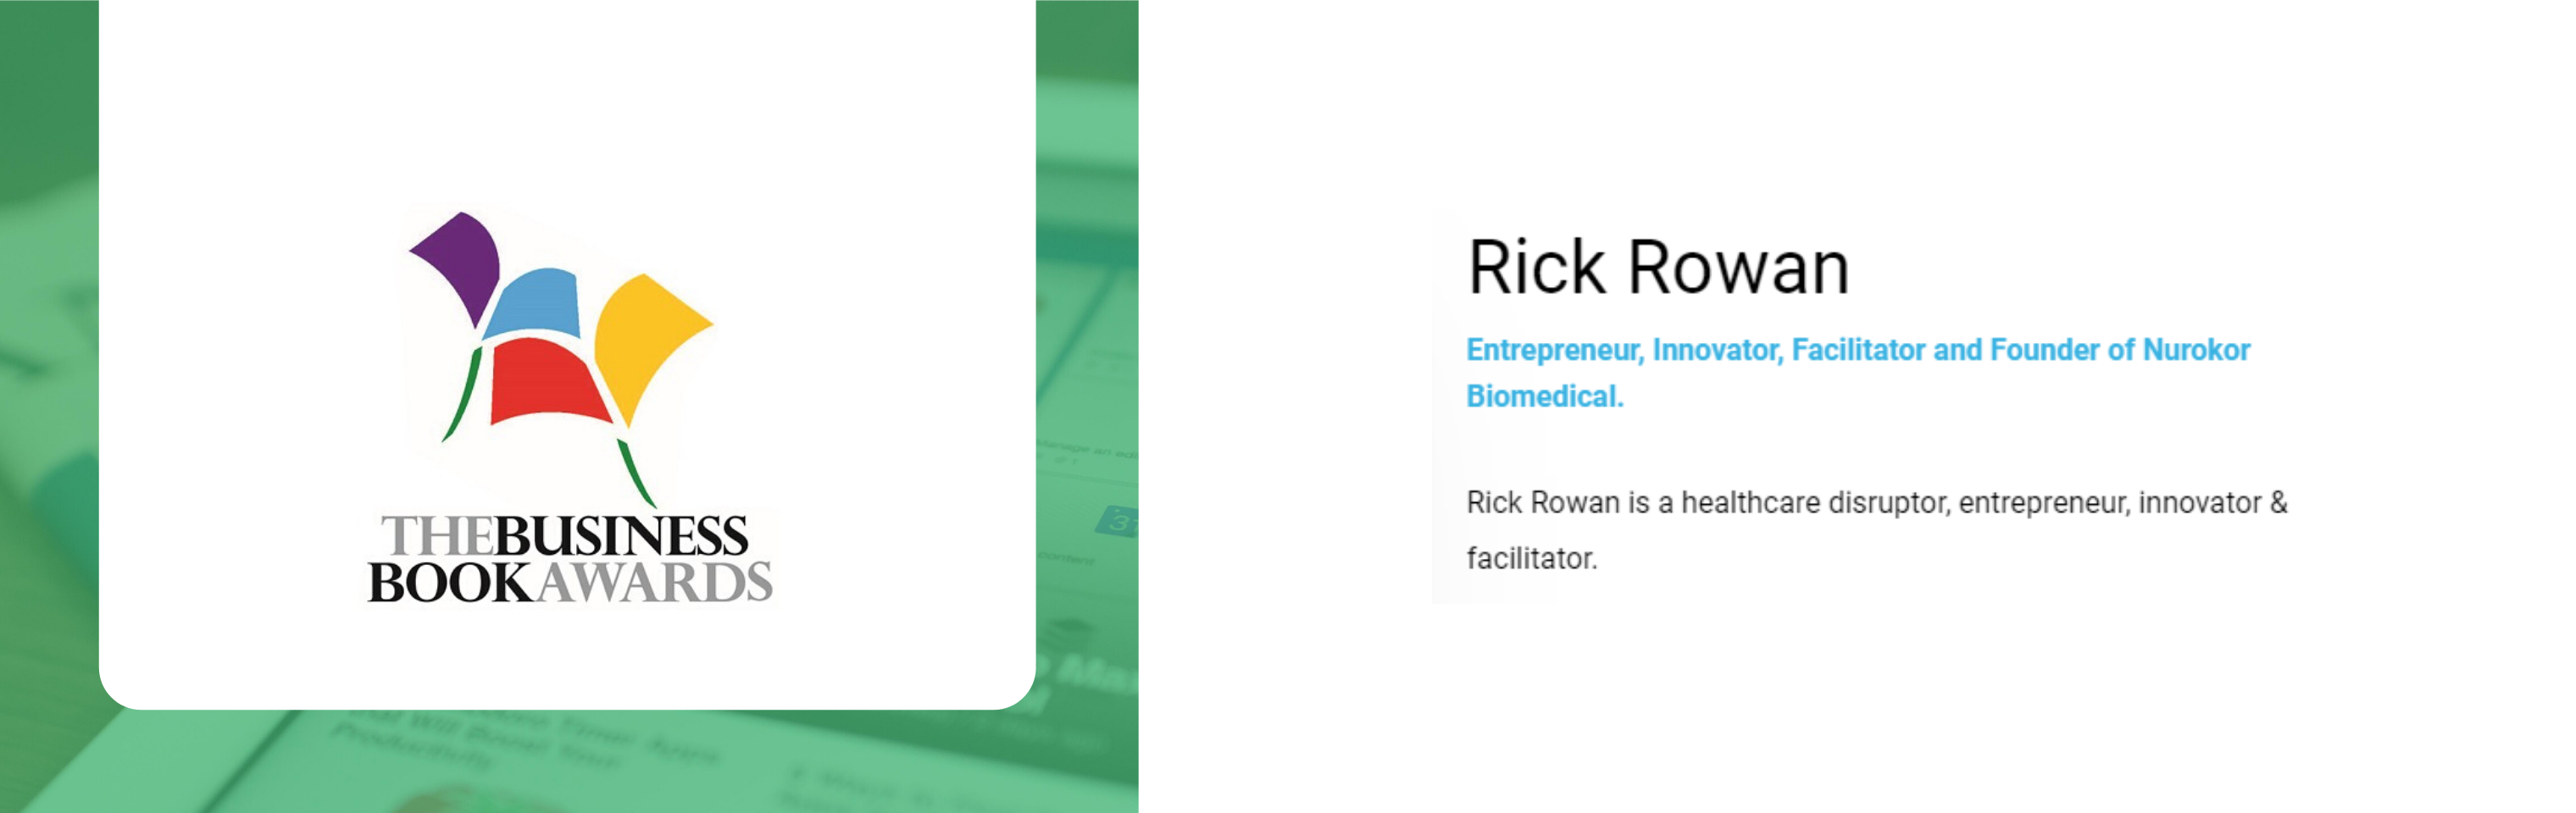 Rick Rowan - Entrepreneur, Innovator, Facilitator and founder of NuroKor